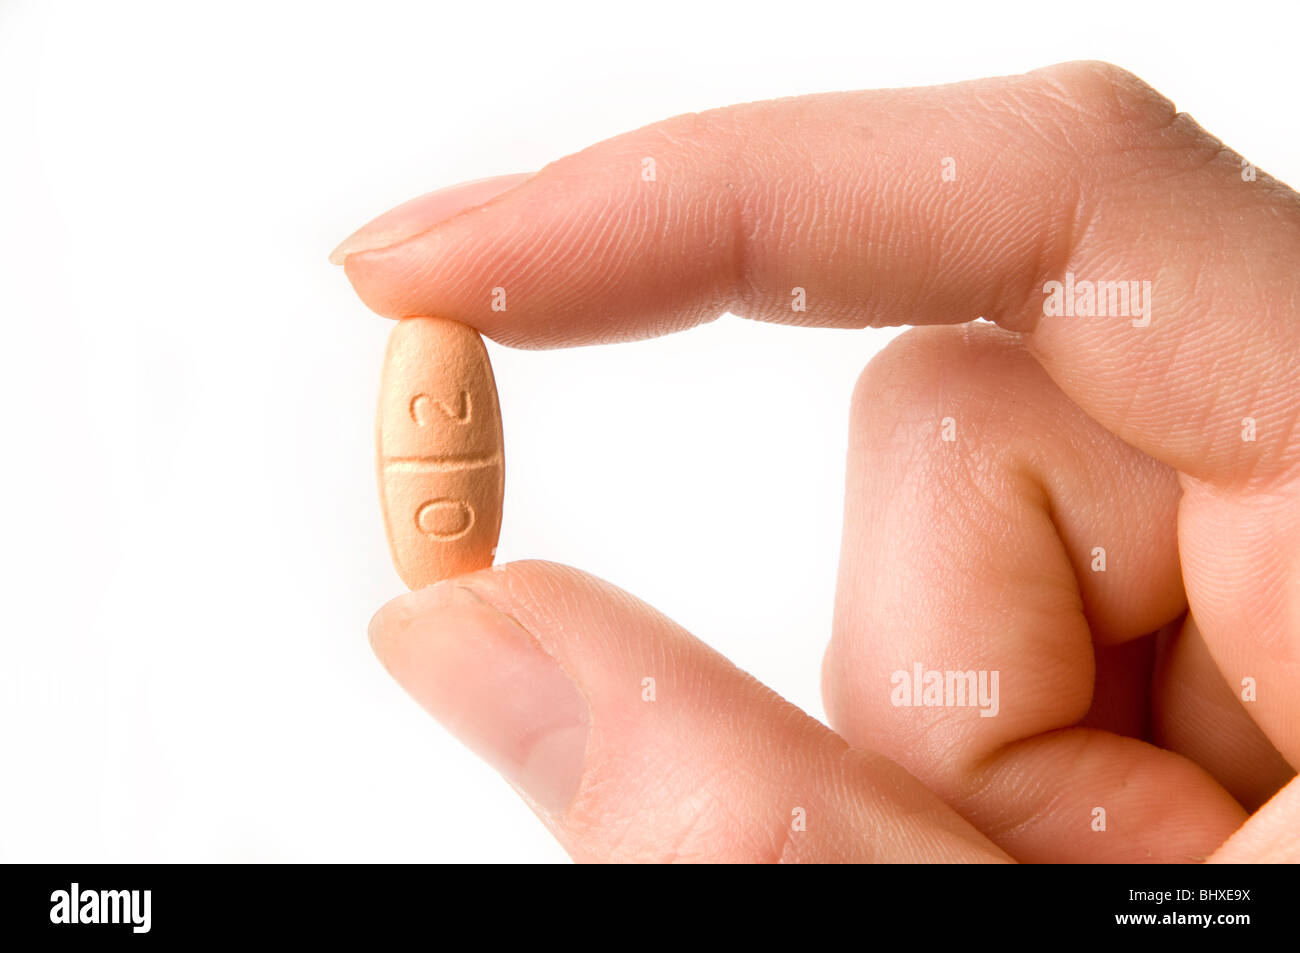 hand holding vitamin Stock Photo